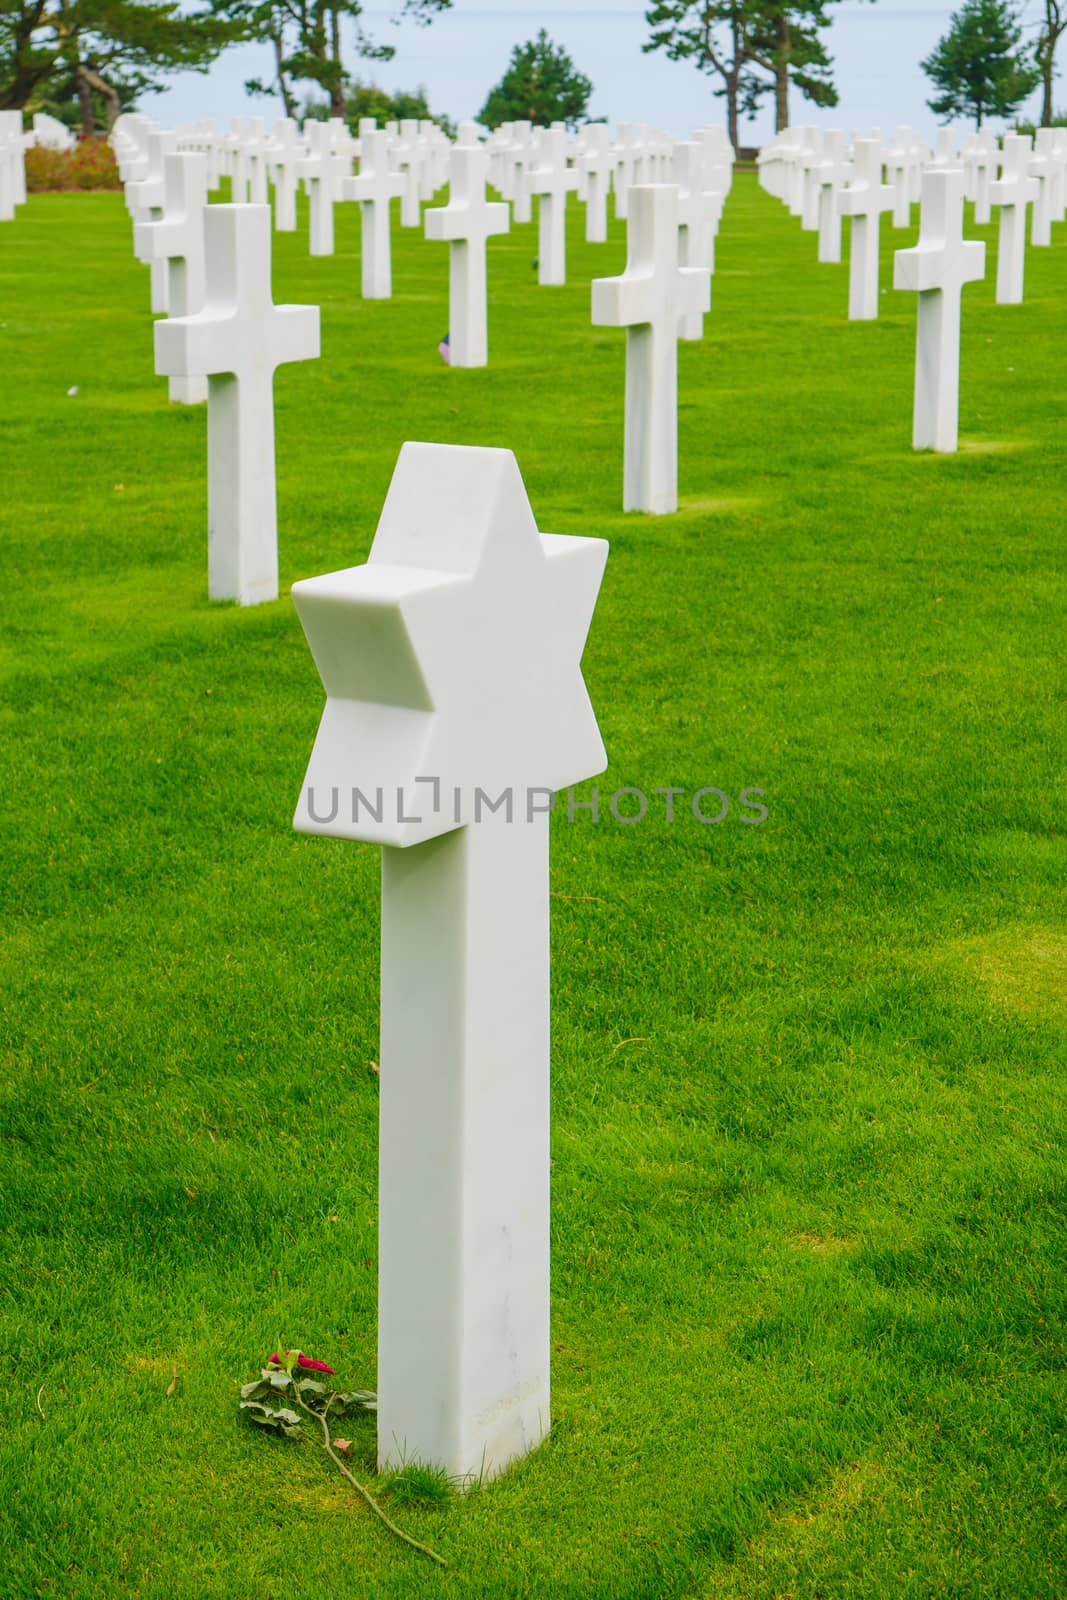 American World War II Cemetery in Colleville-sur-Mer (near Omaha Beach), Normandy, France